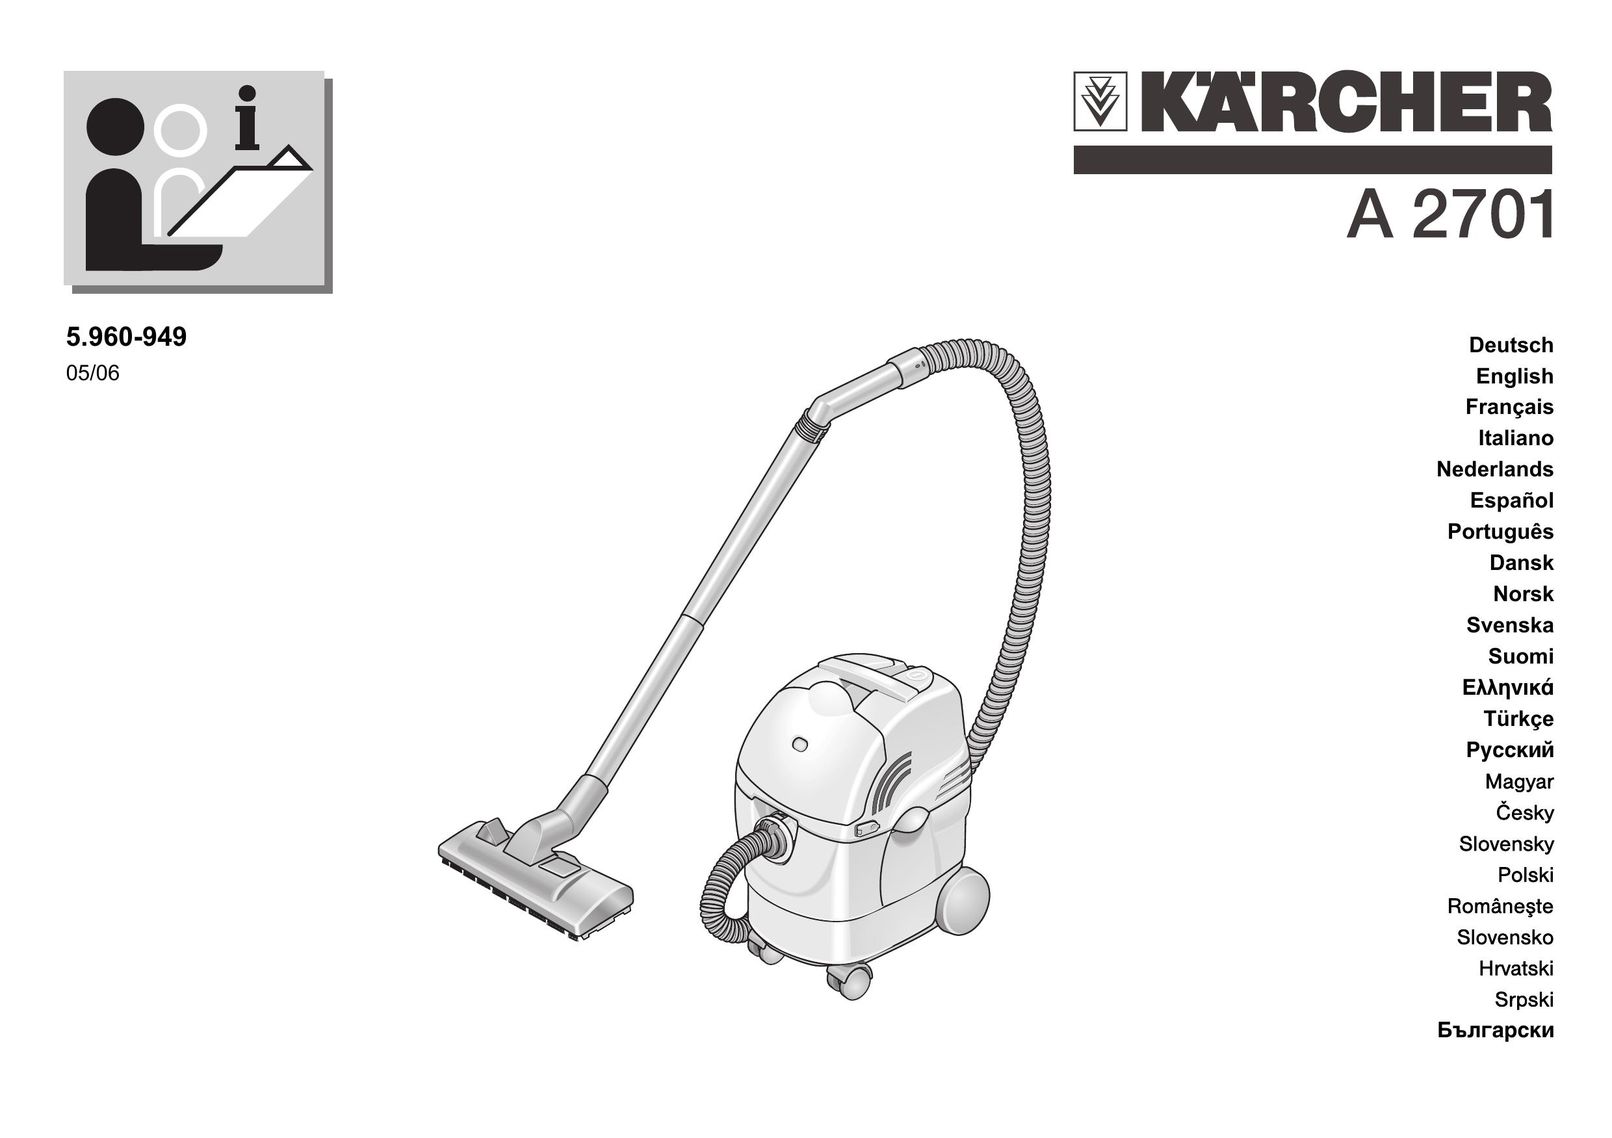 Karcher A 2701 Vacuum Cleaner User Manual